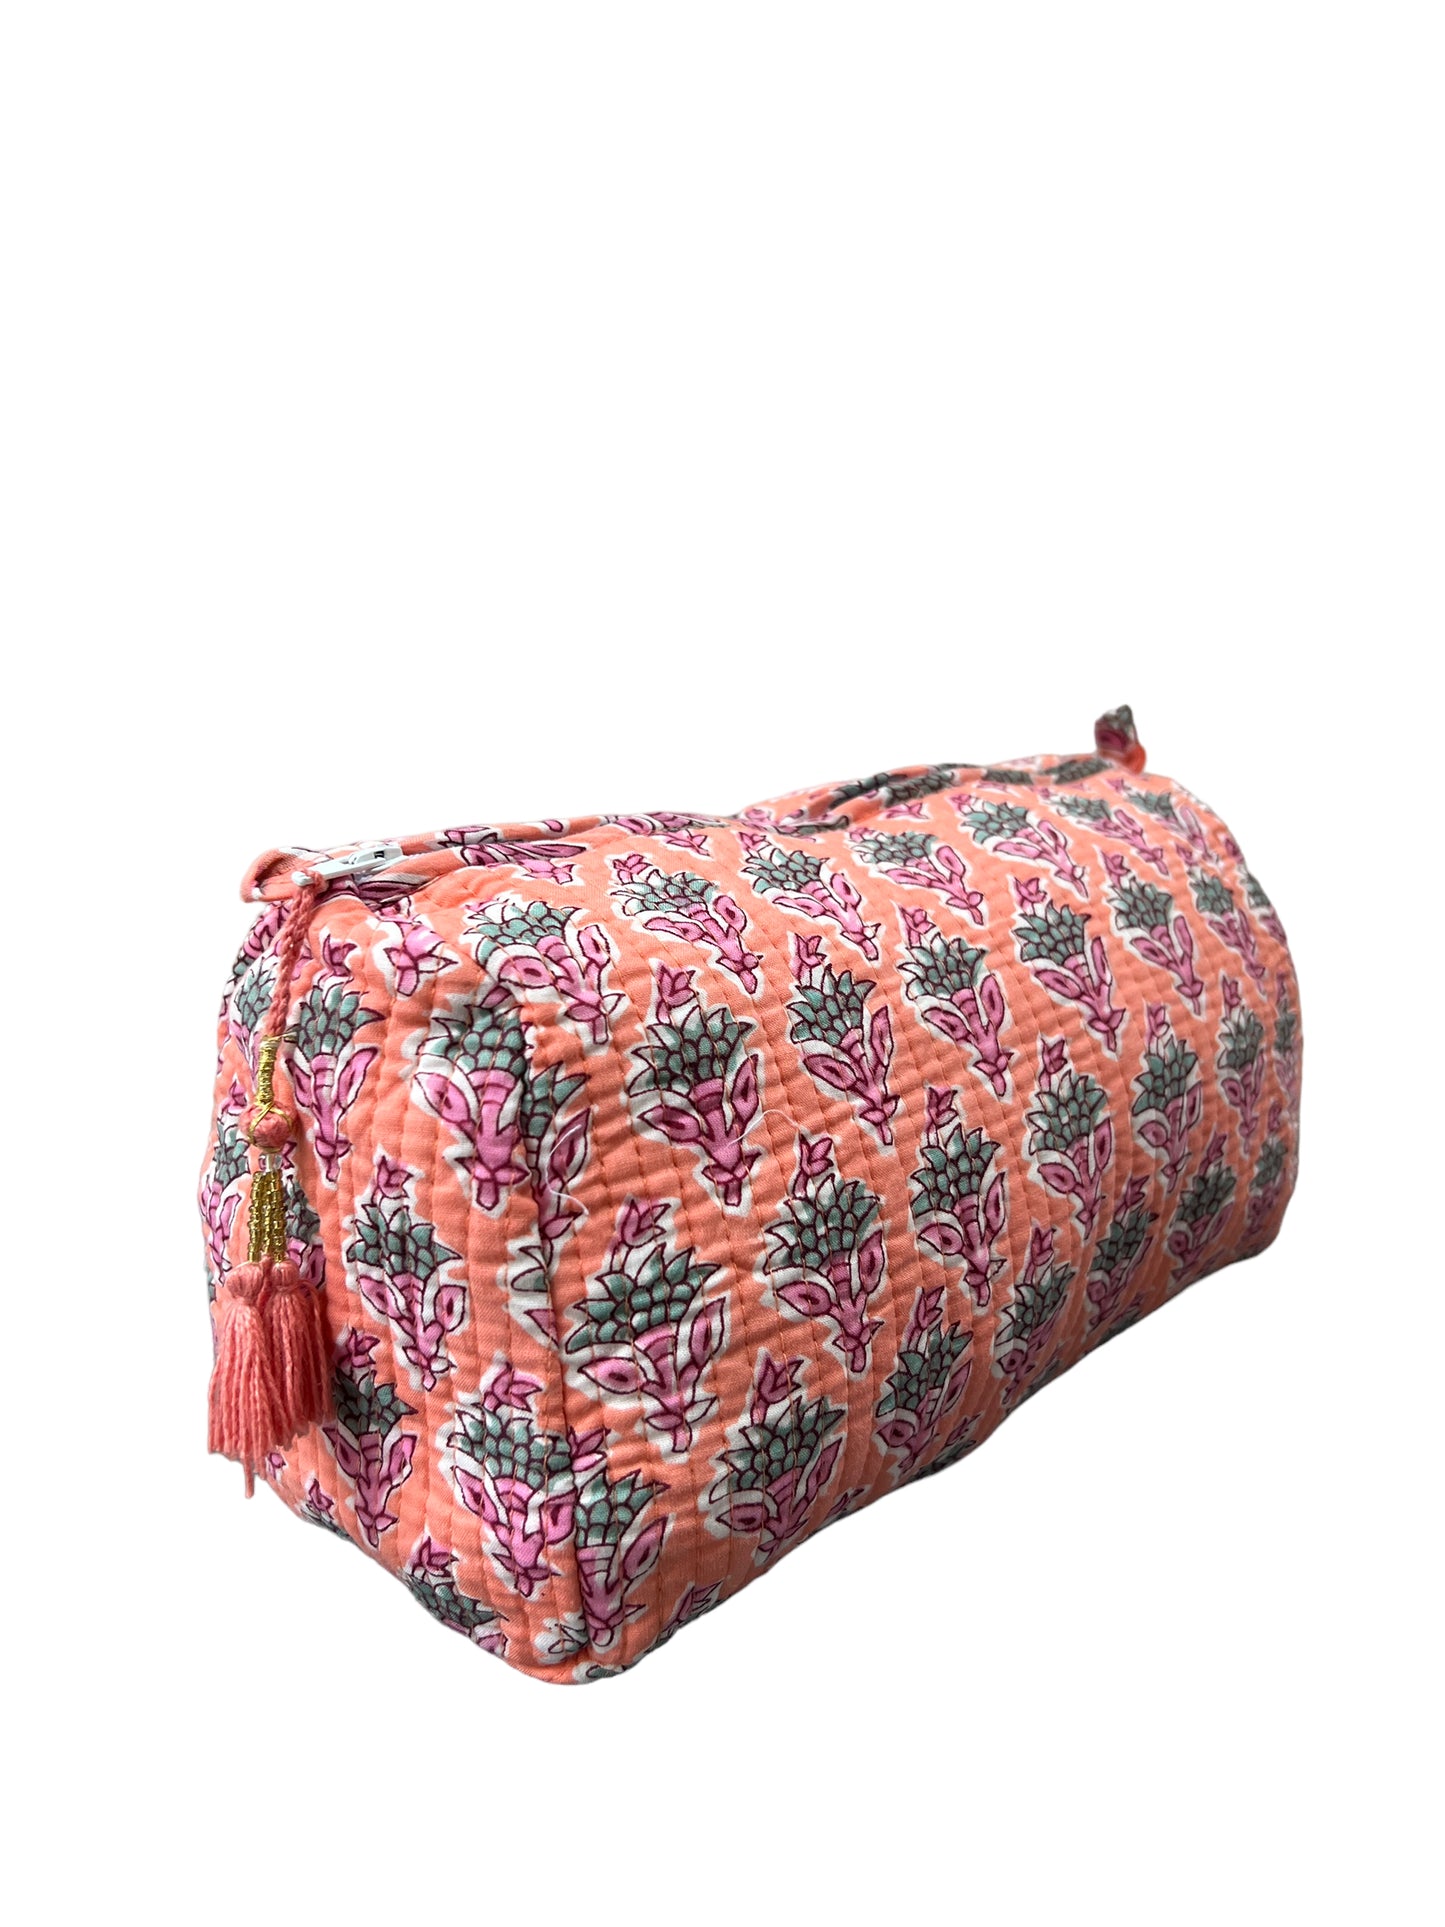 (M096) Make Up Bag Coral Pink Green Buti